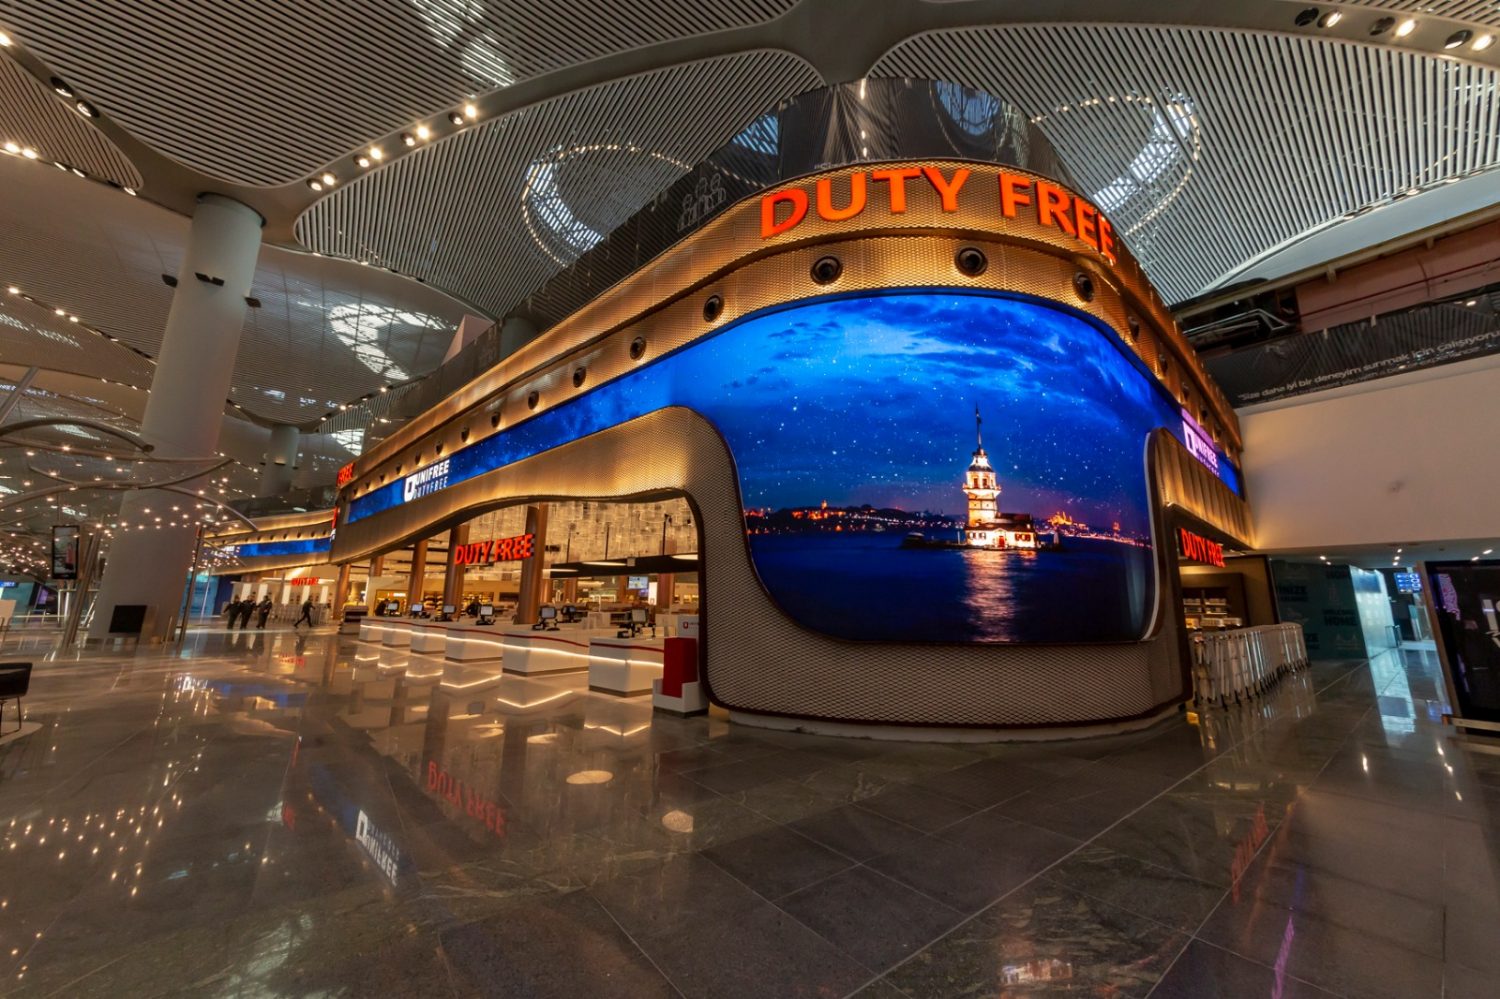 Istanbul Airport / DutyFree